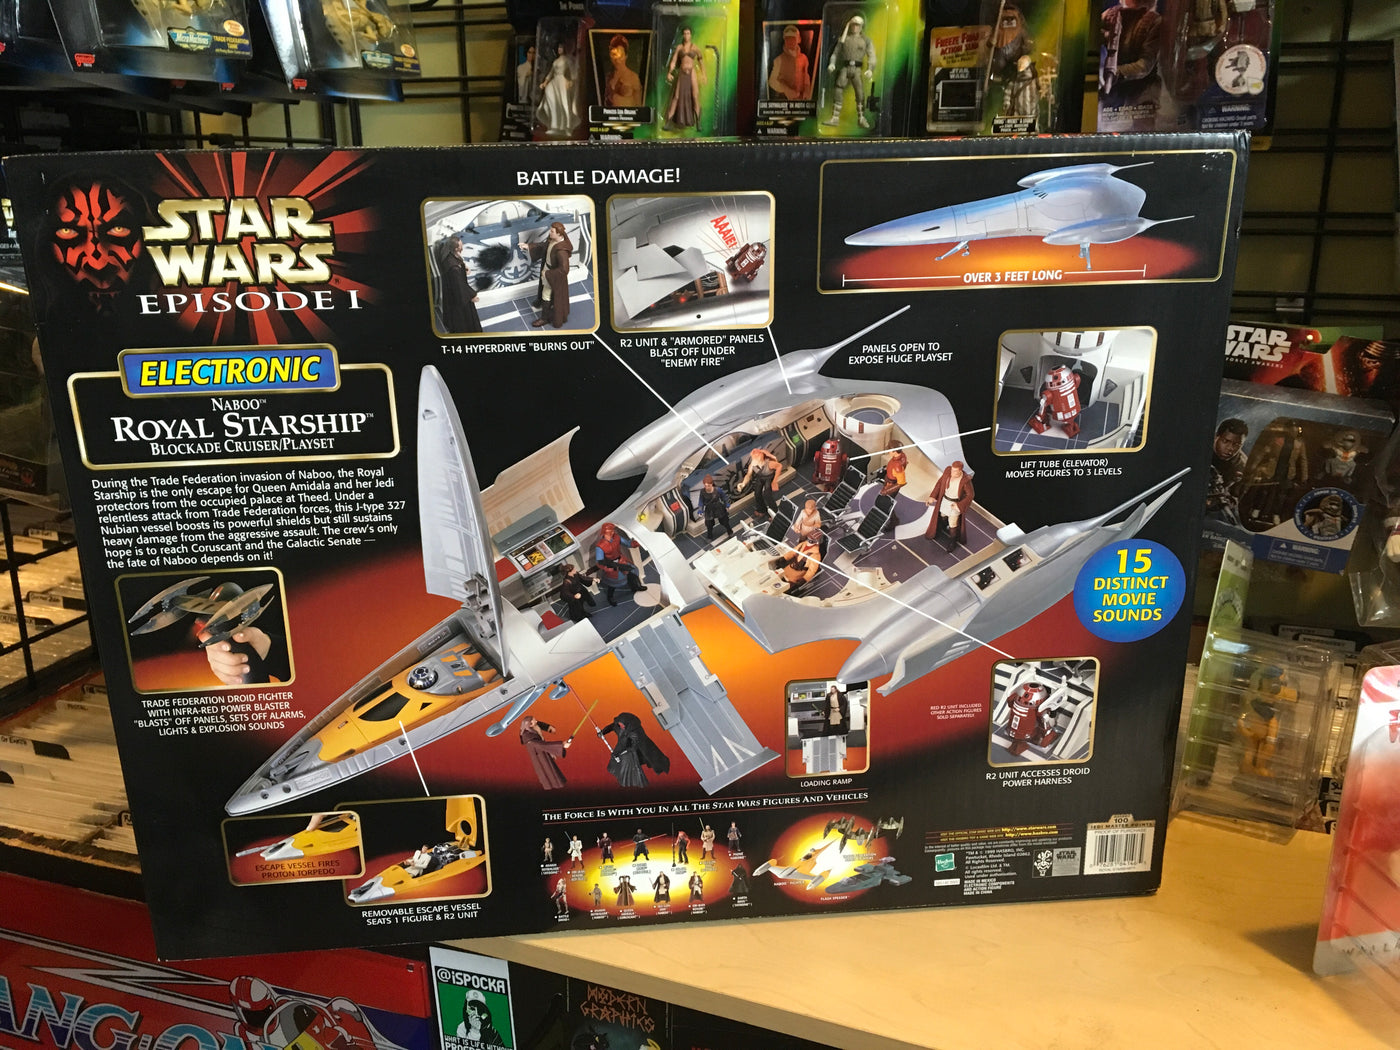 star wars naboo royal starship toy